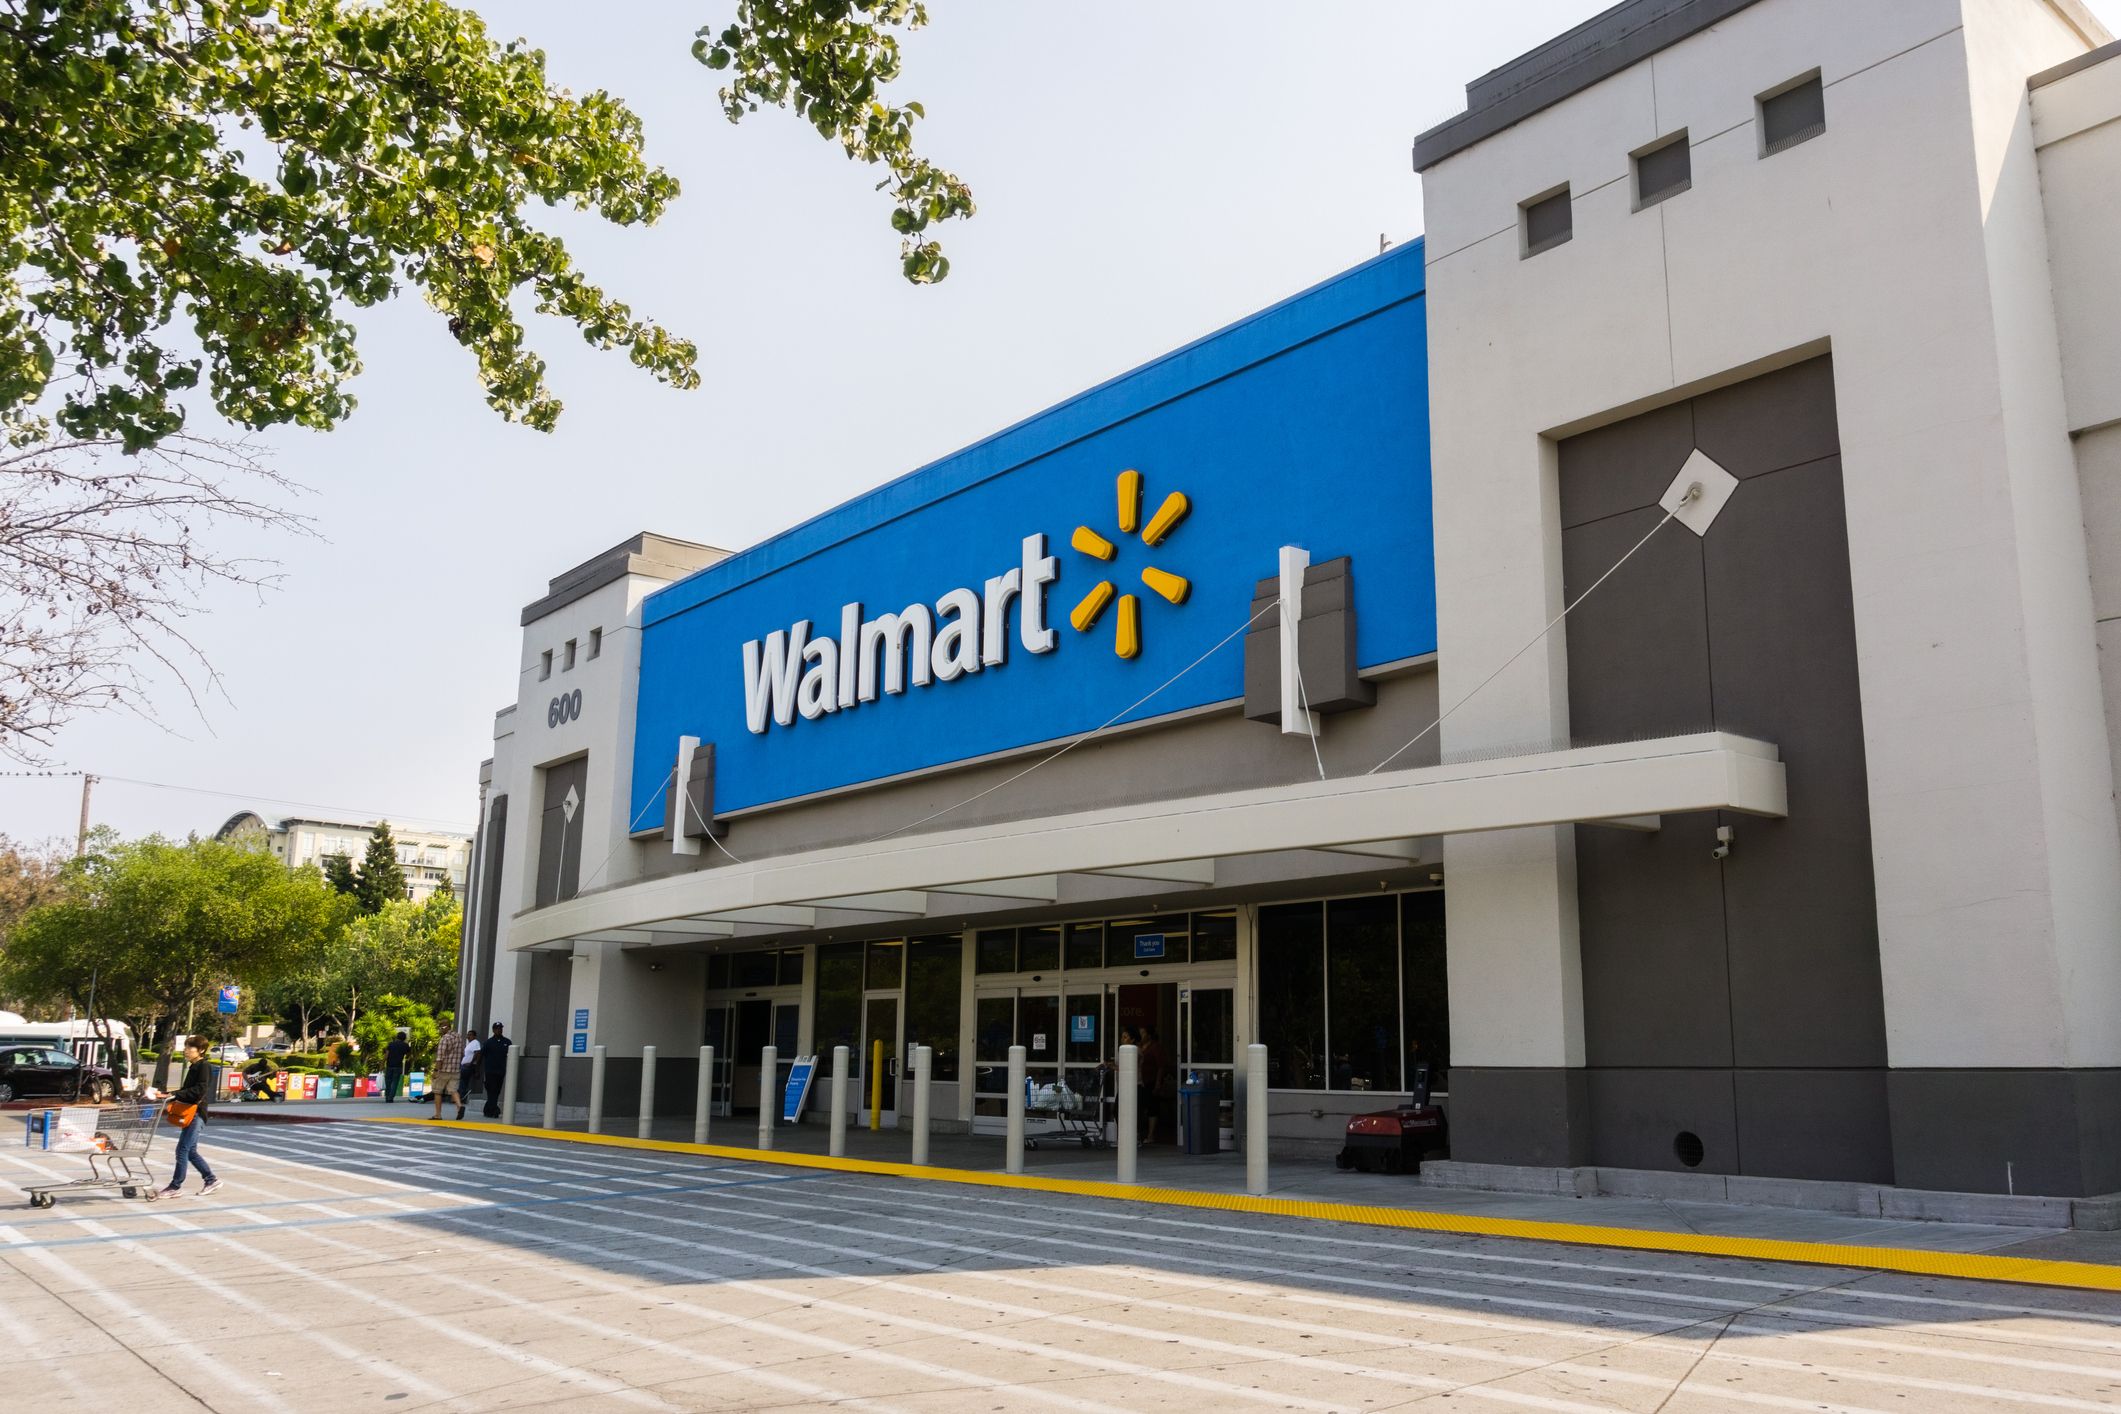 Is Walmart open on Easter - PahulParmiss